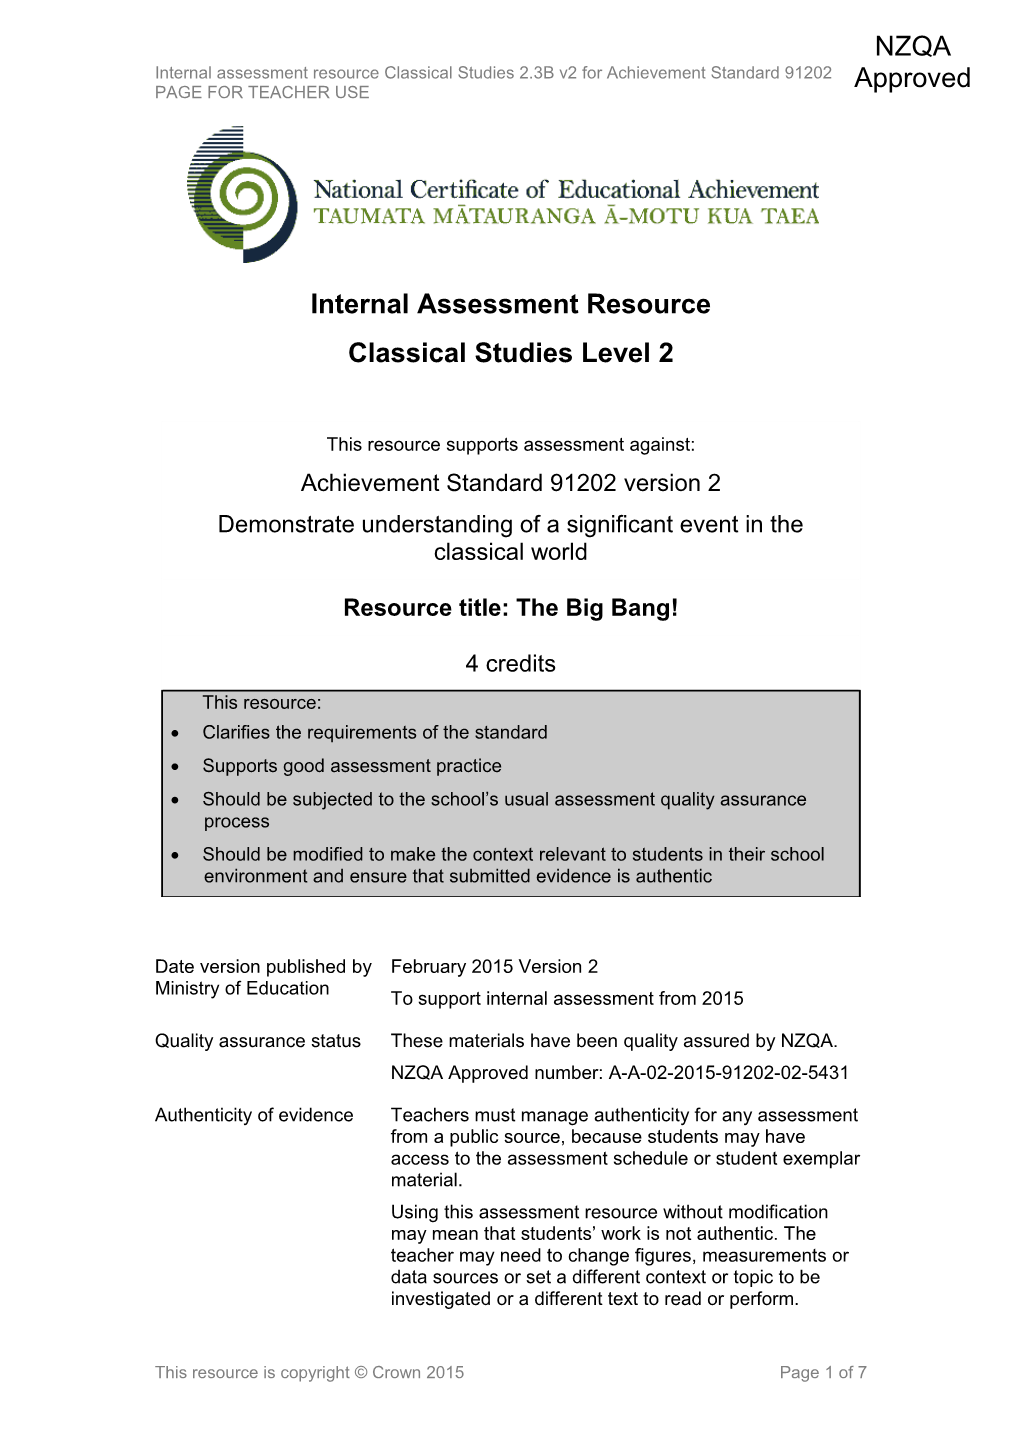 Level 2 Classical Studies Internal Assessment Resource